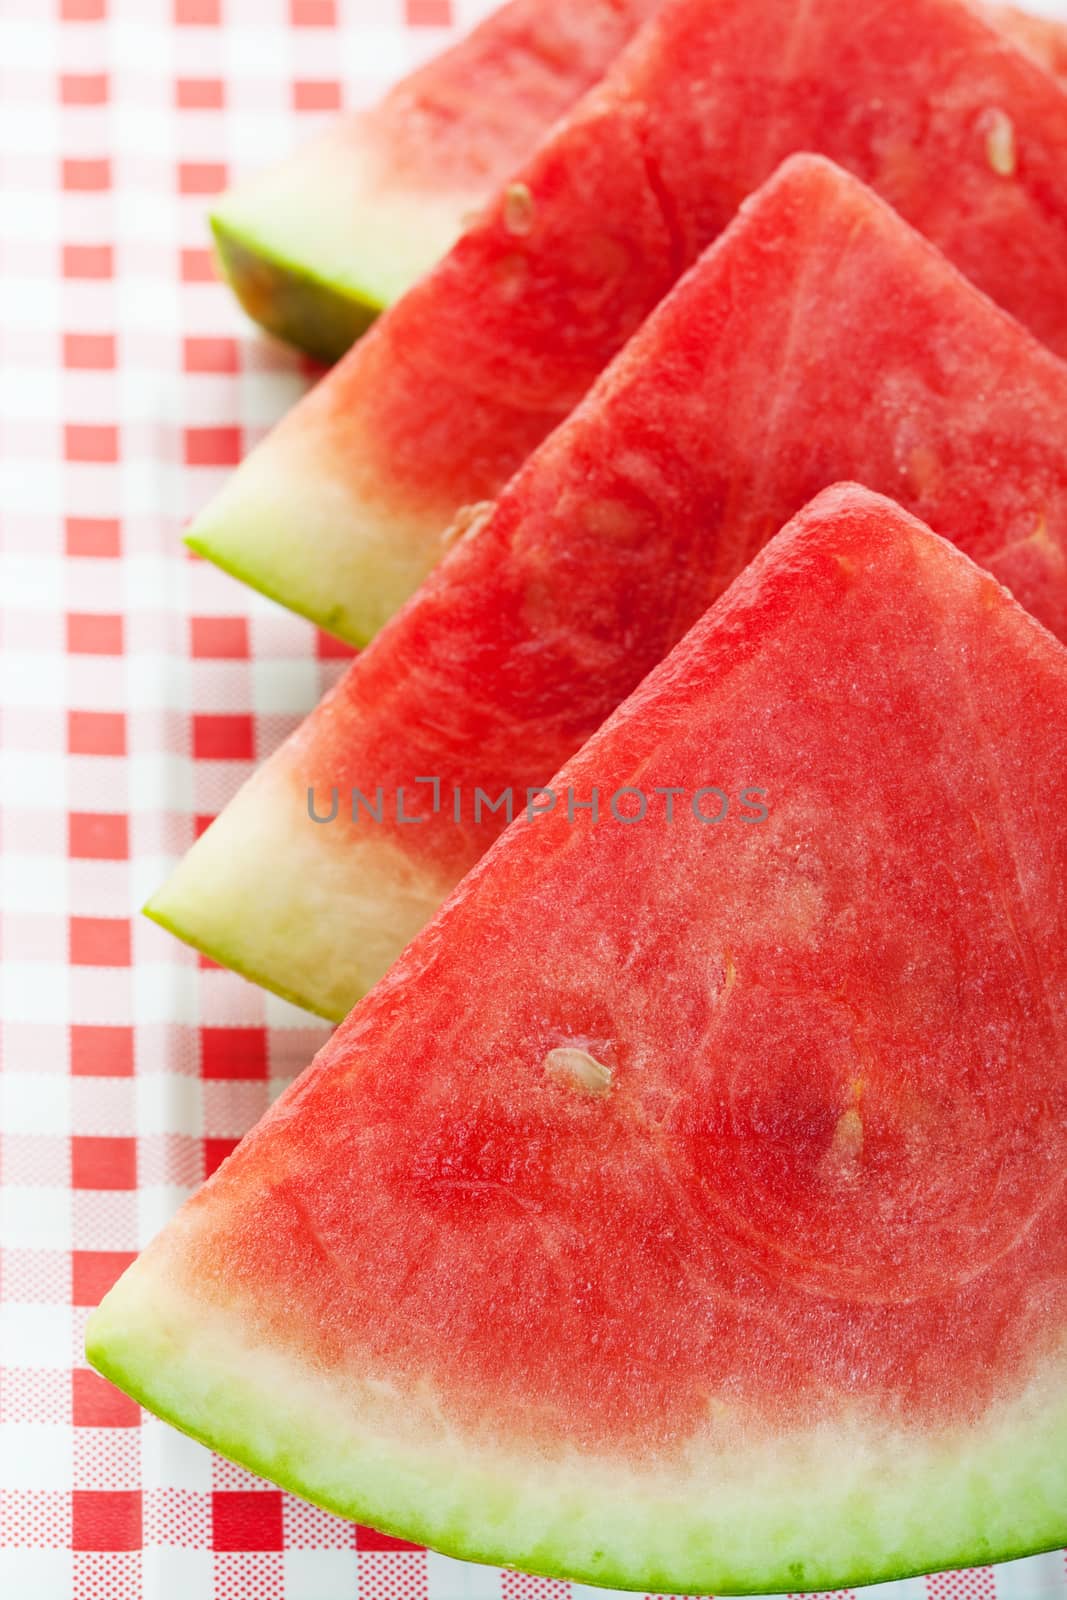 Watermelon Slices by songbird839